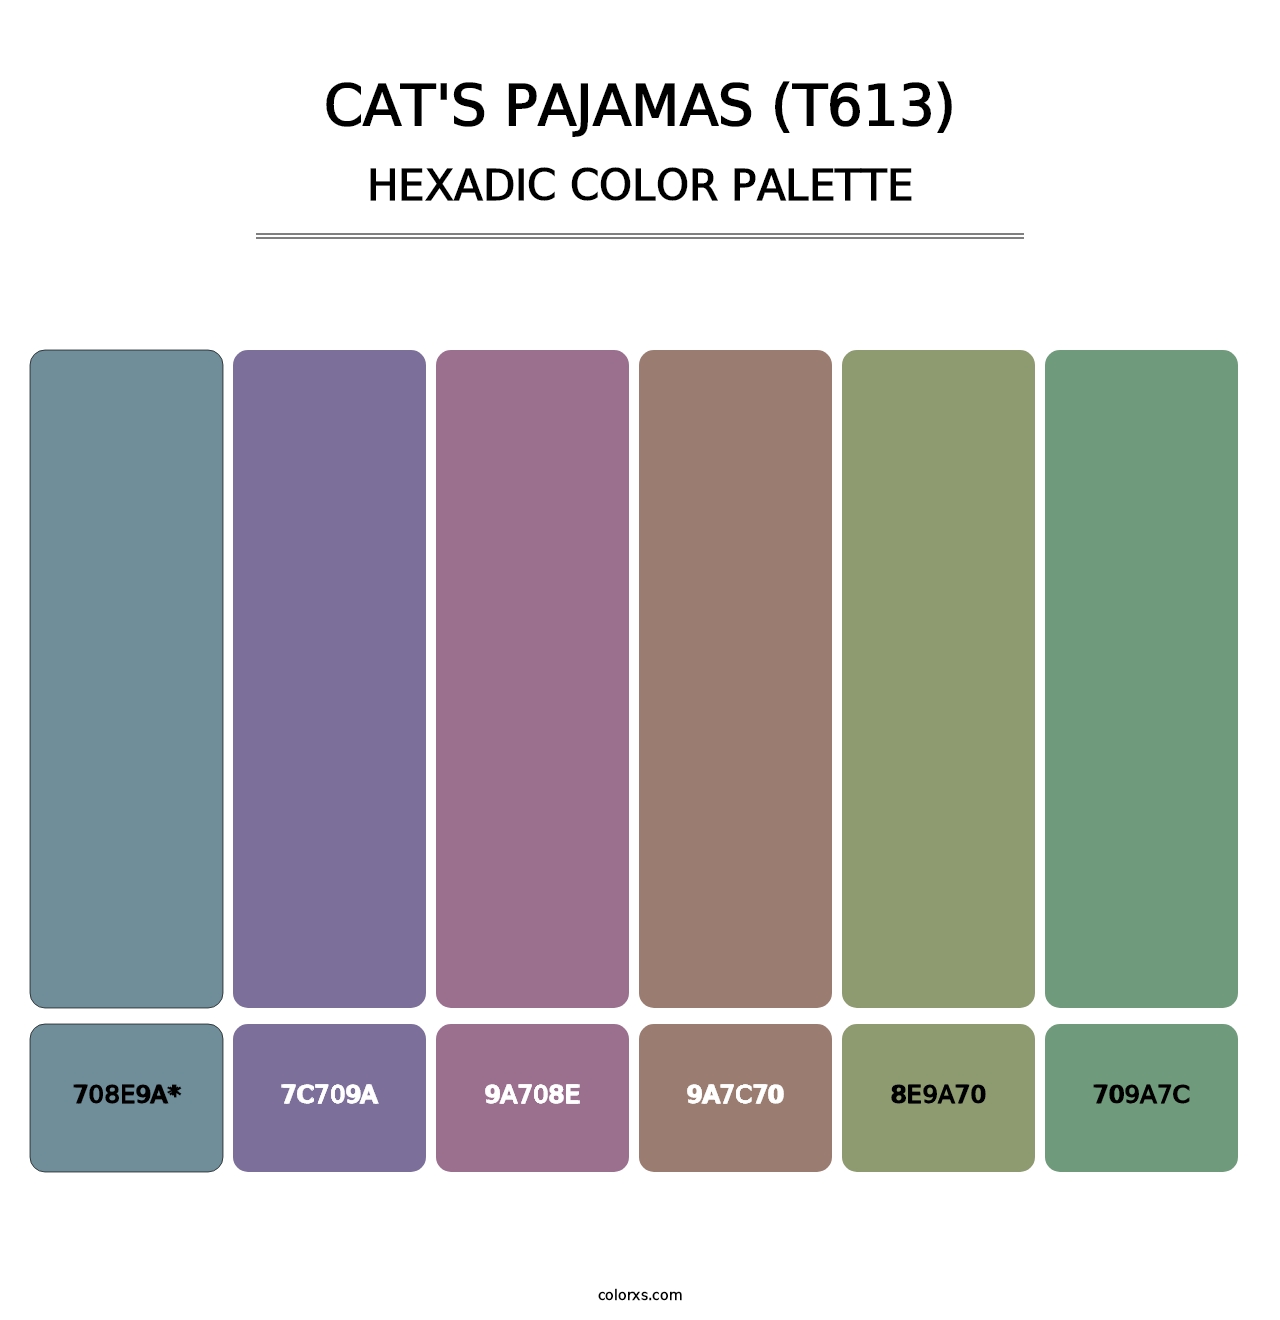 Cat's Pajamas (T613) - Hexadic Color Palette